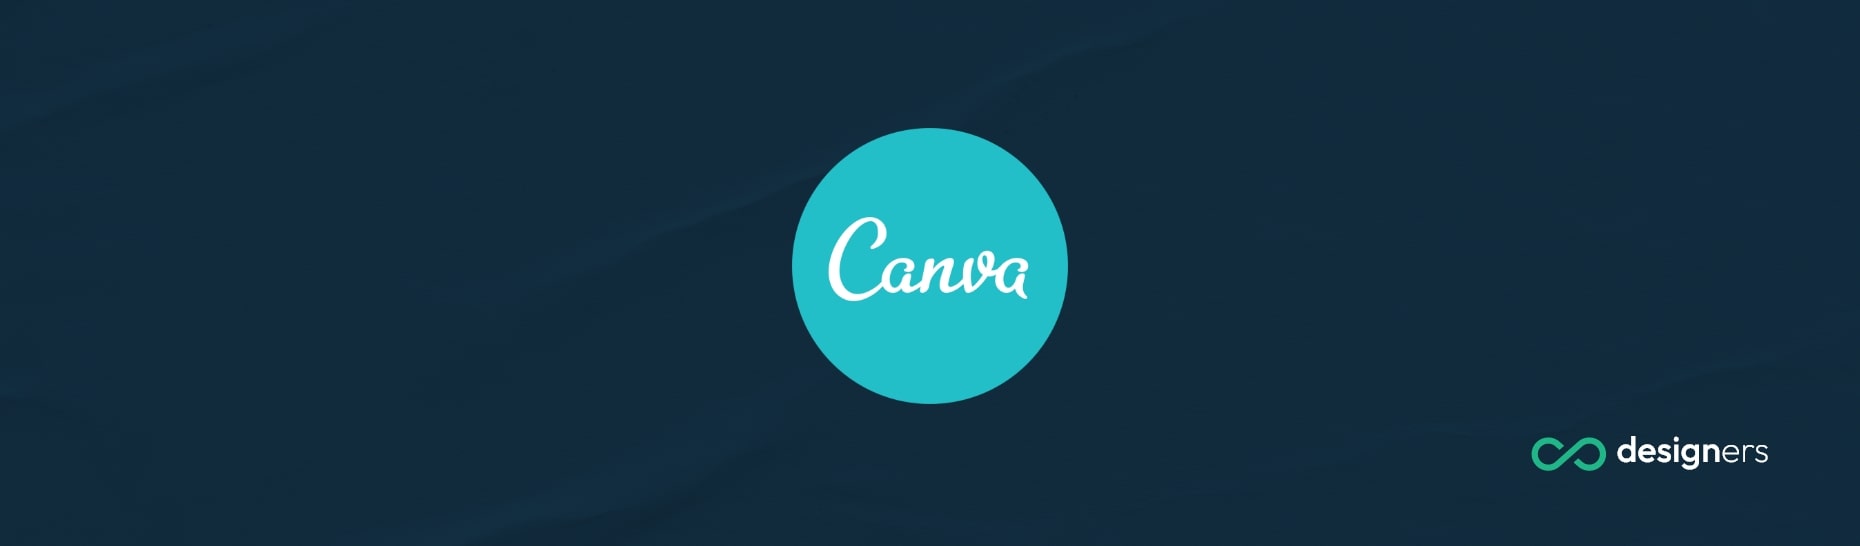 How do I make a Folded Card in Canva?